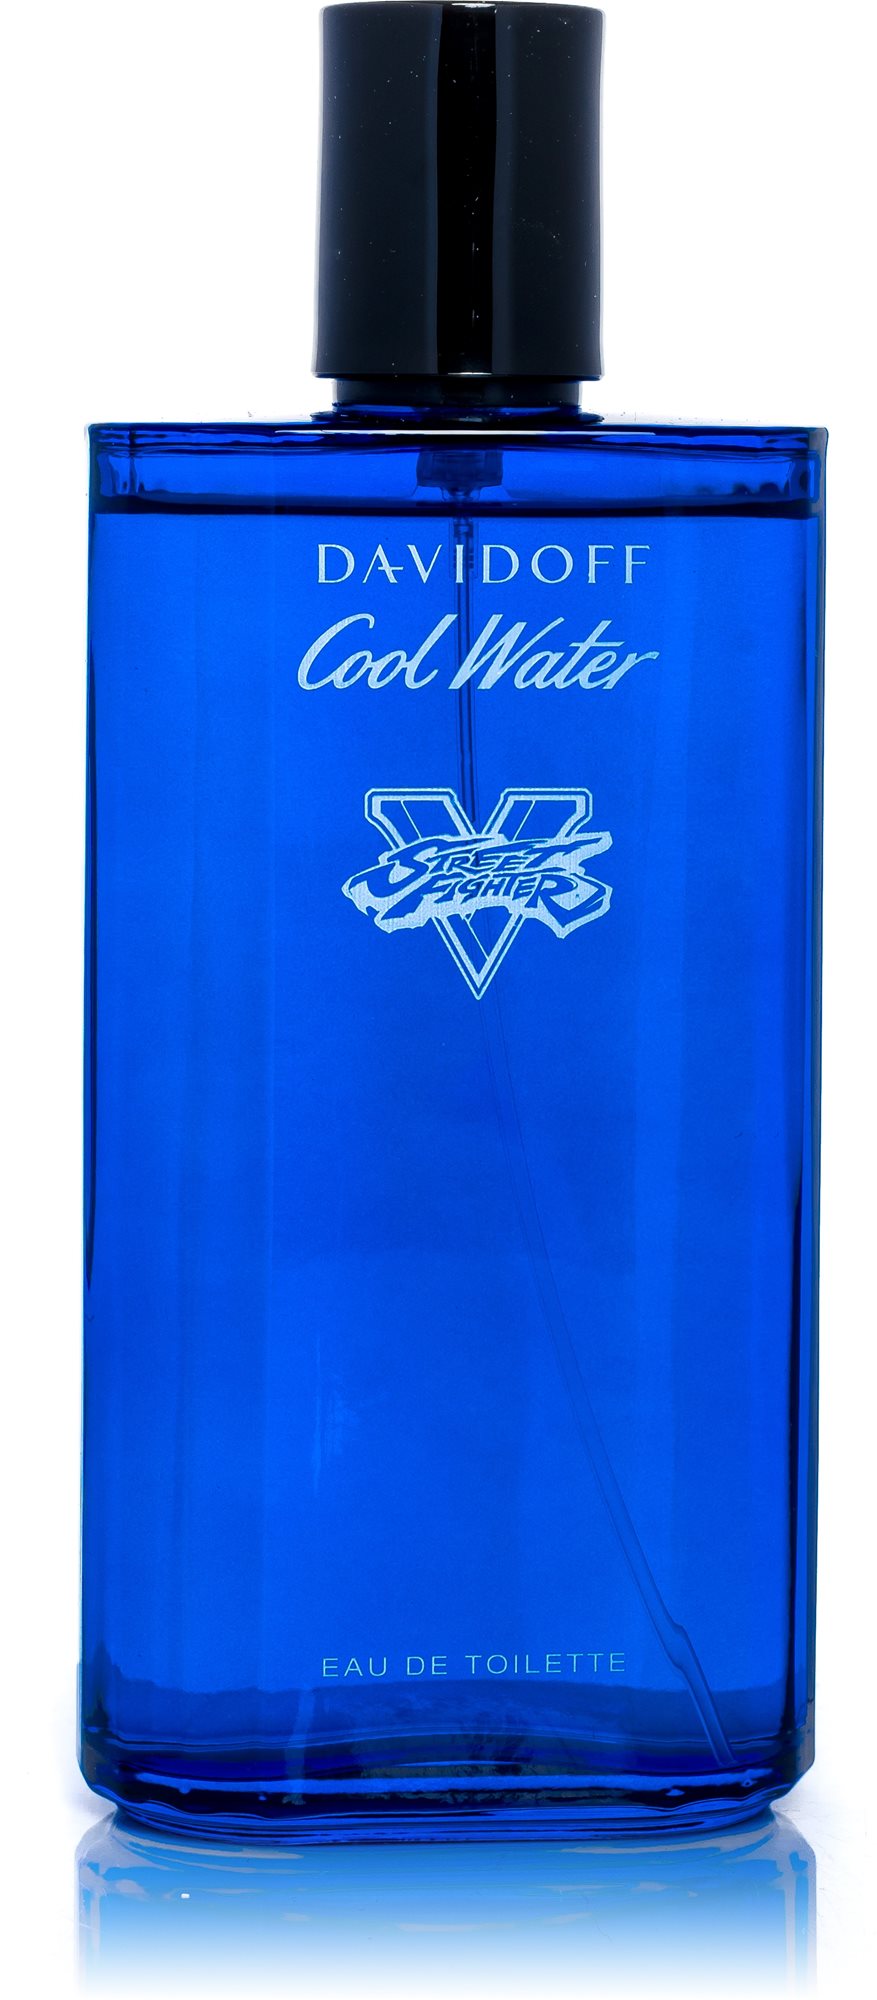 Eau de Toilette DAVIDOFF Cool Water Street Fighter Champion Summer Edition for Him EdT 125 ml